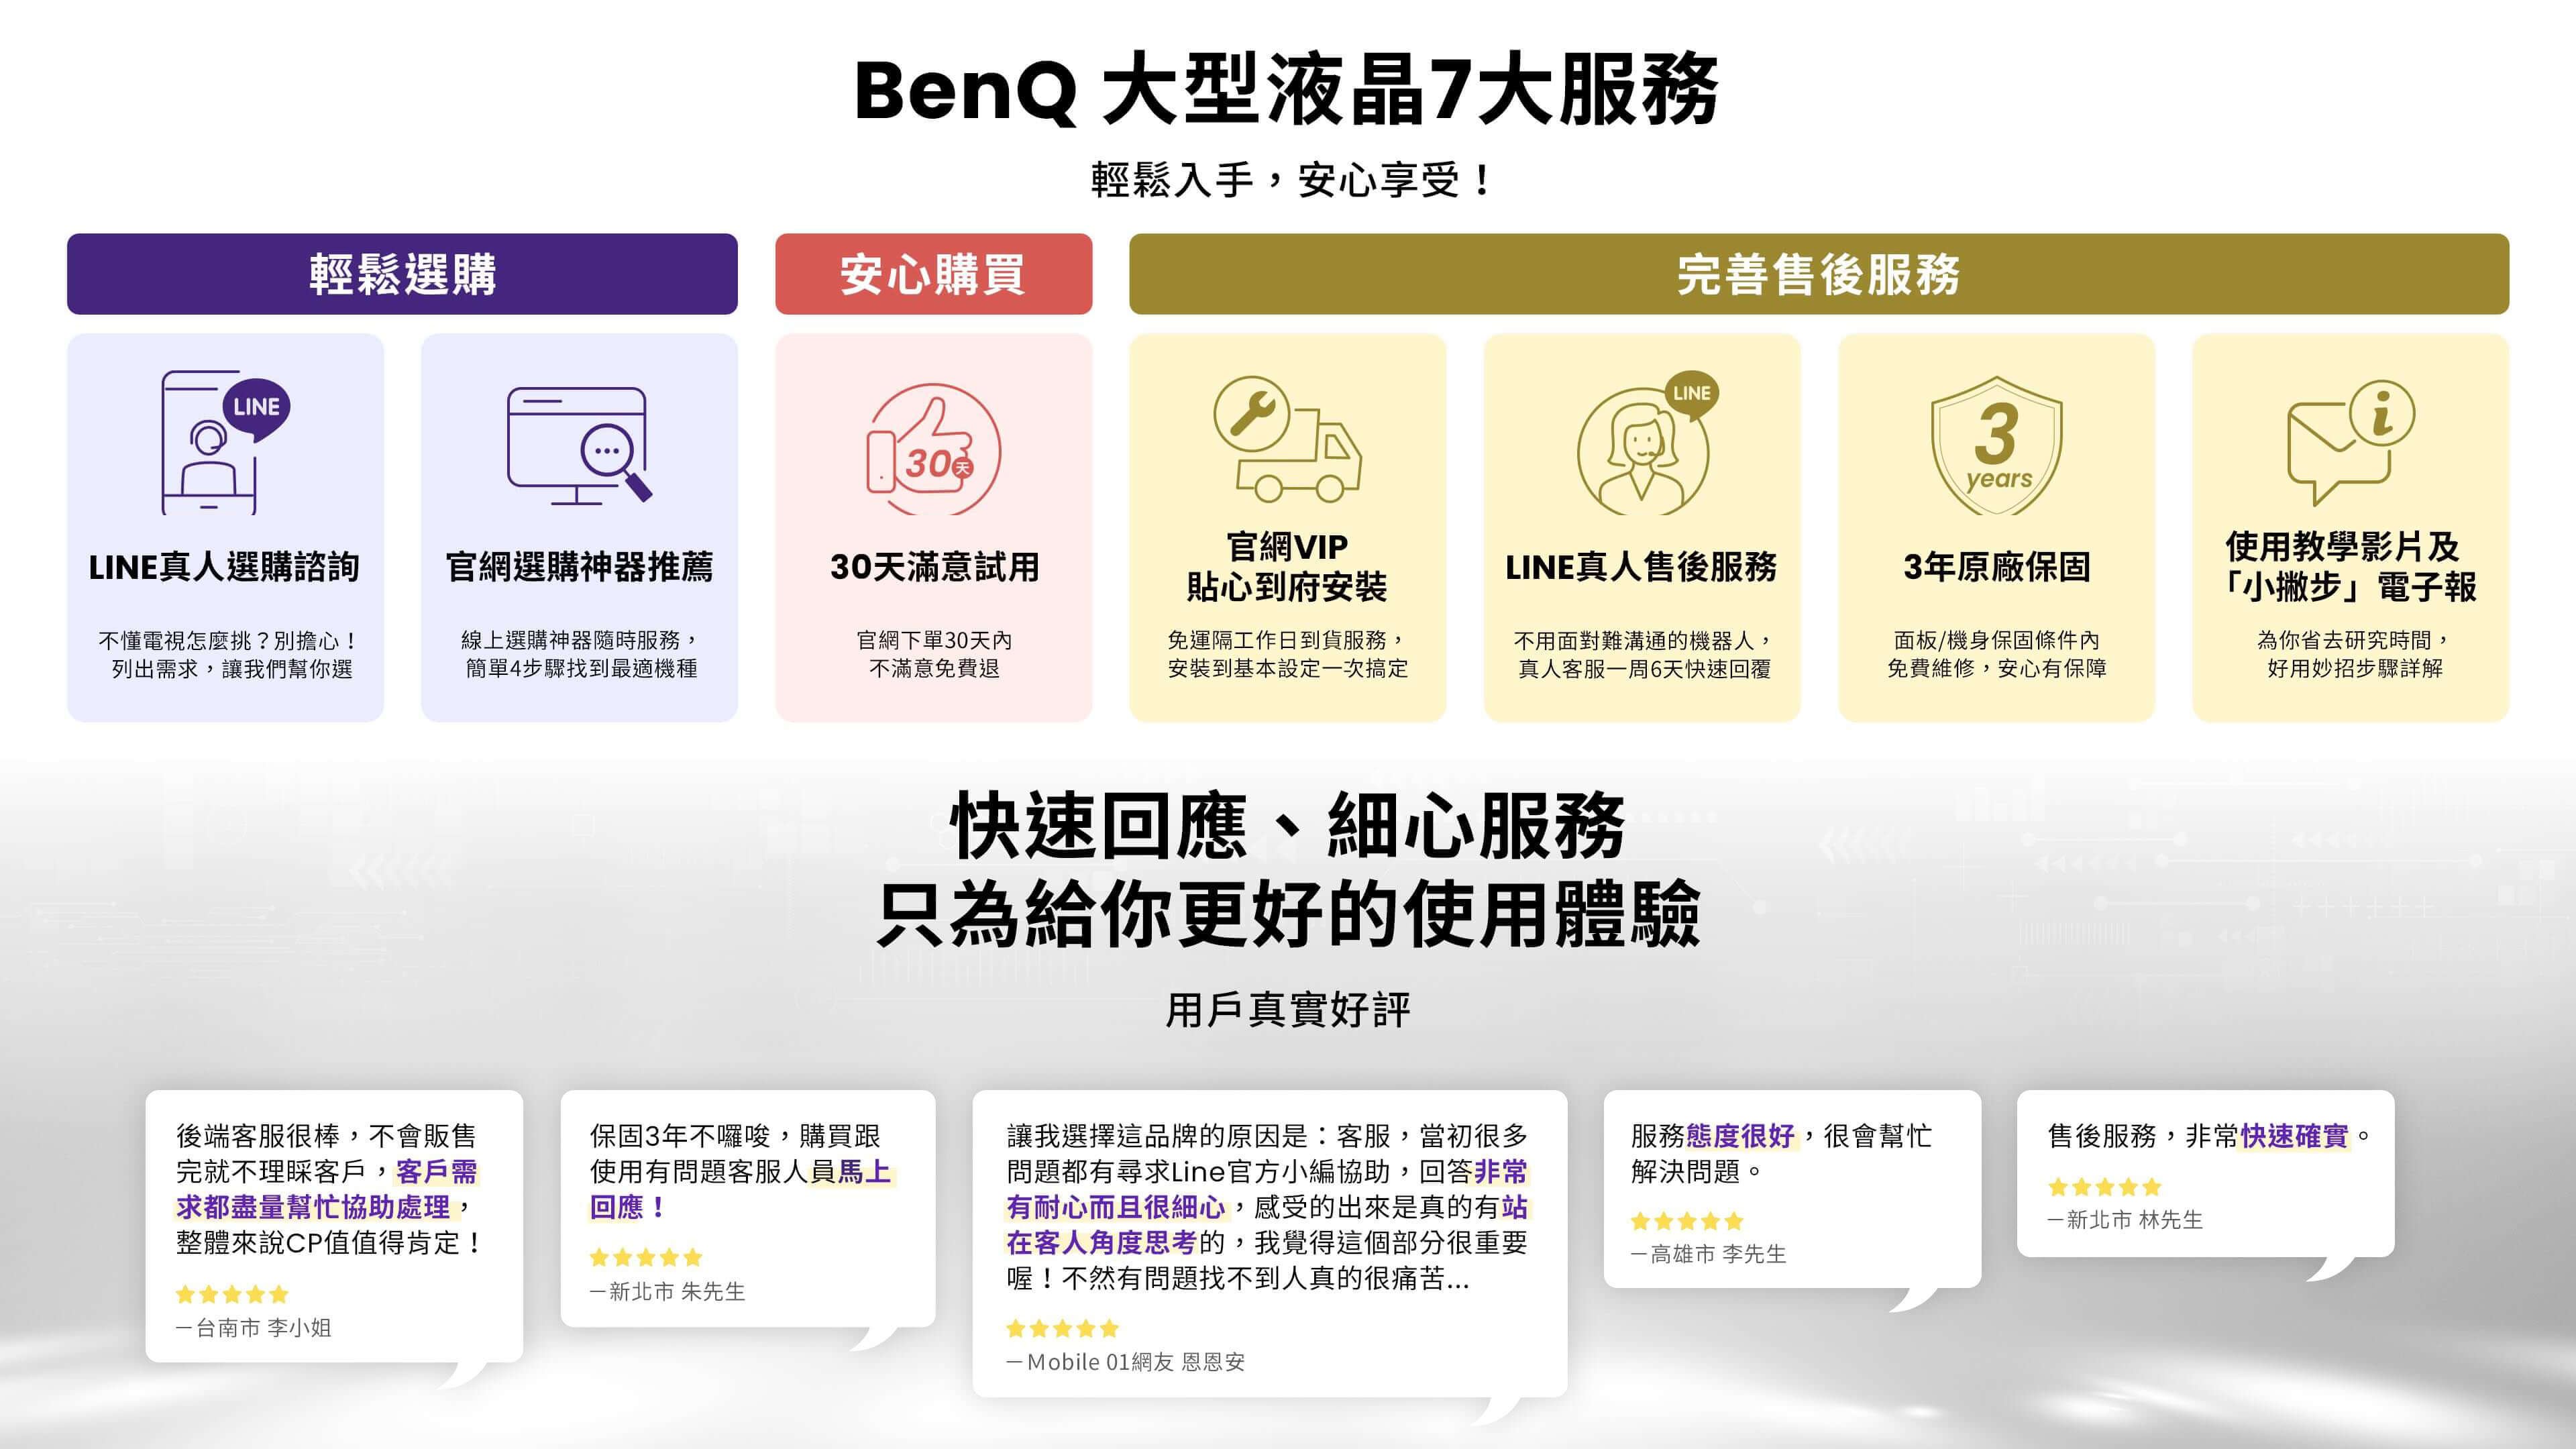 BenQ 大型液晶 7 大服務